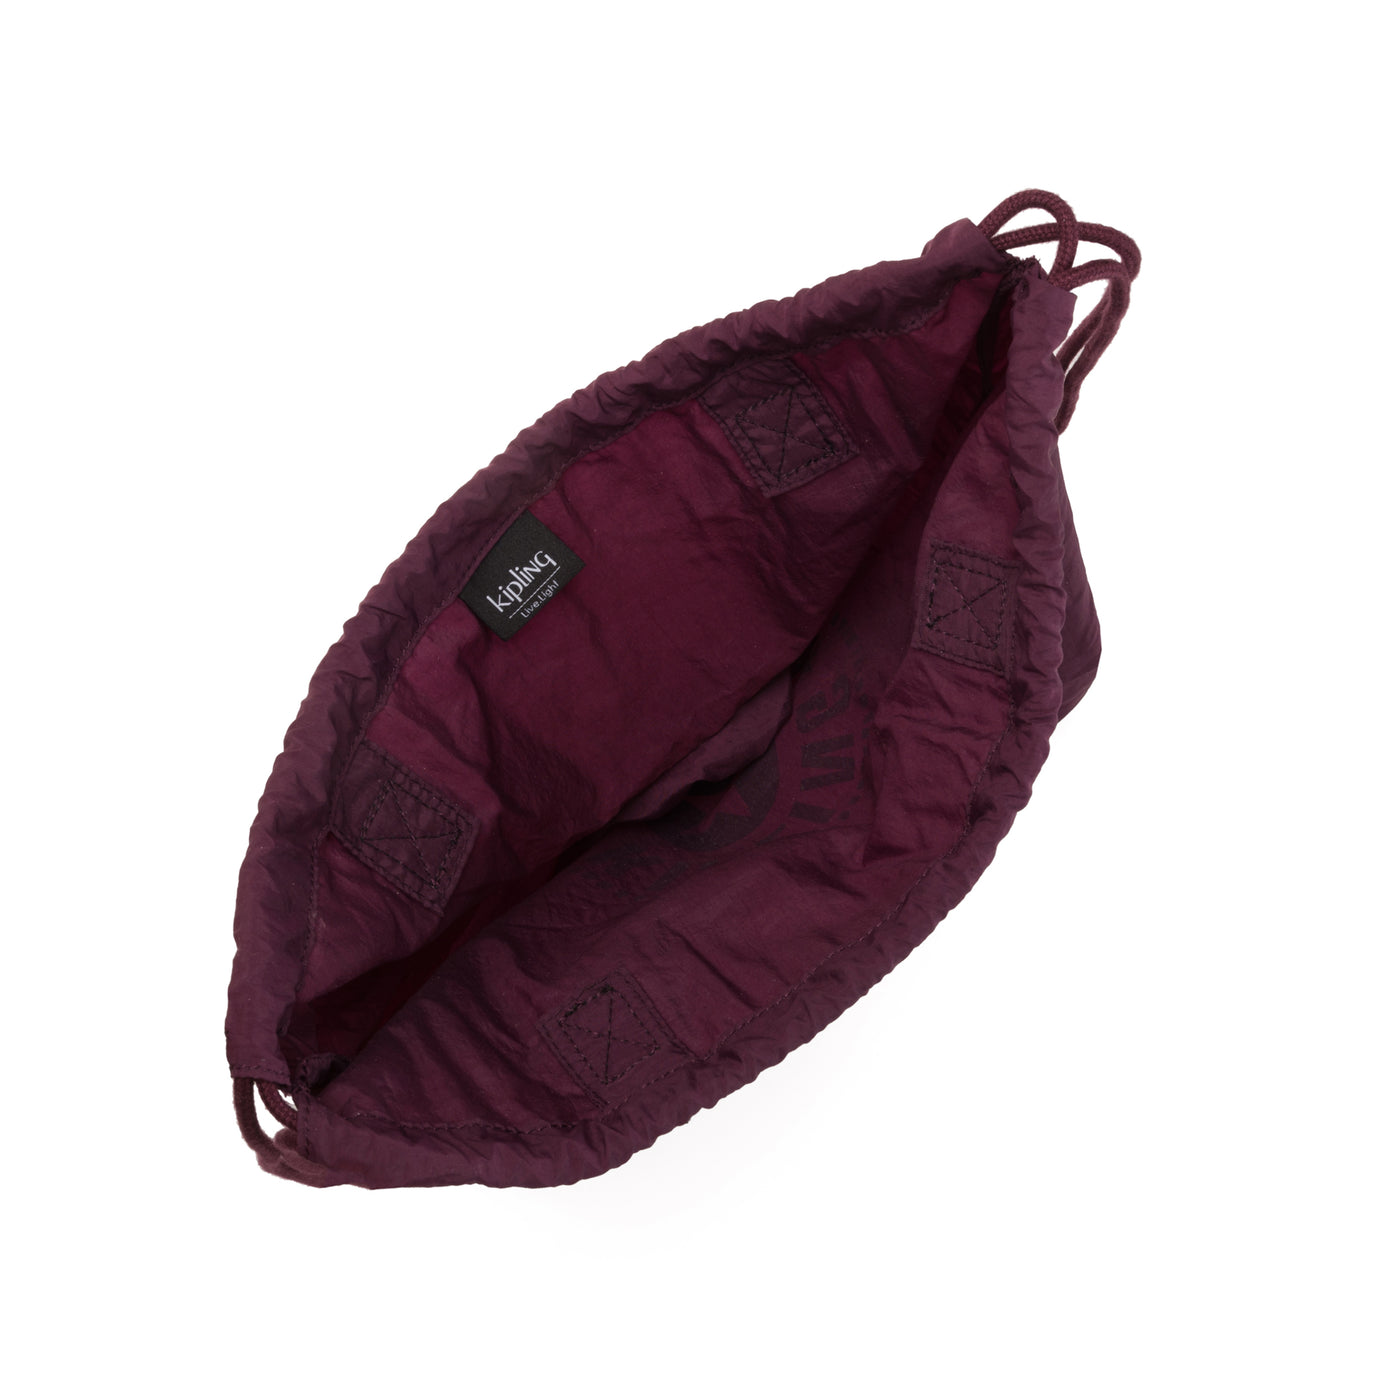 Hiphurray Packable | Medium Foldable Tote Bag